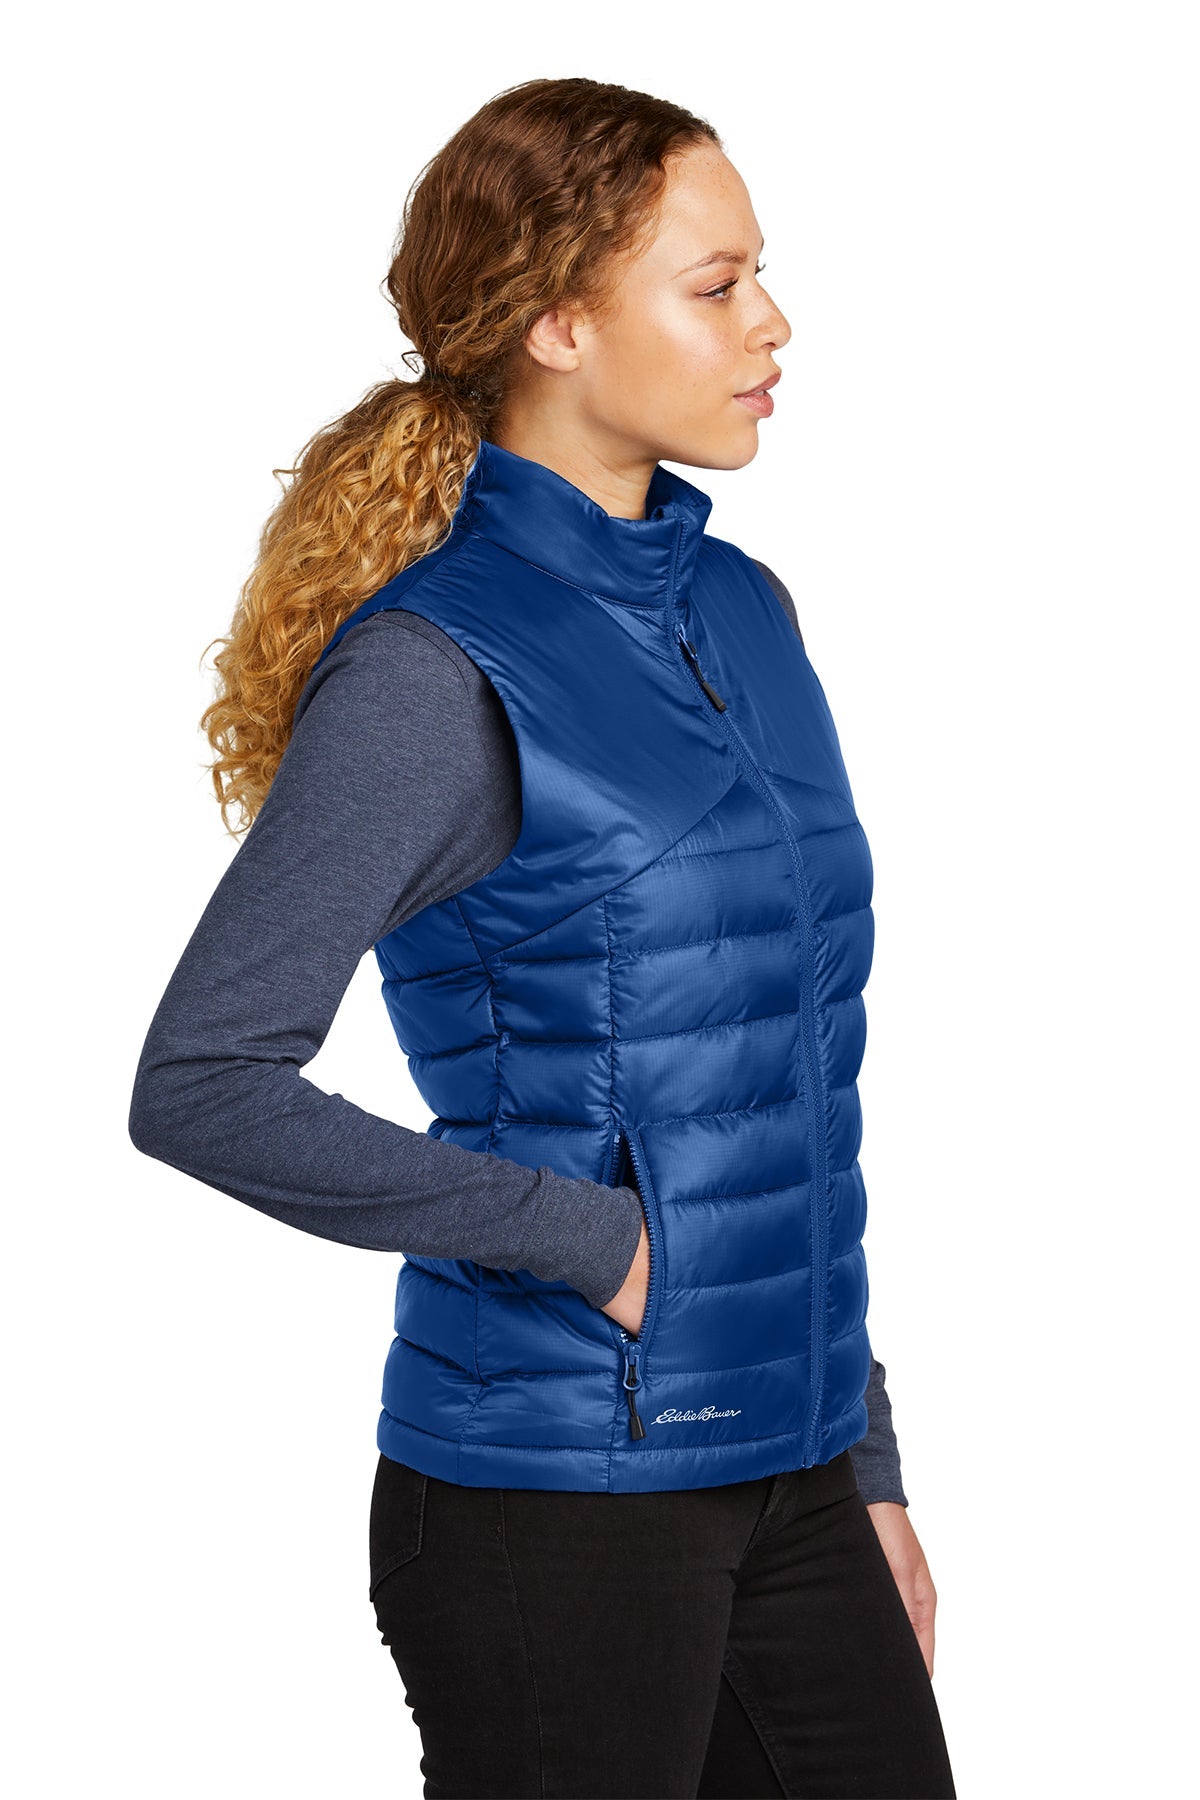 Eddie Bauer Ladies Customized Quilted Vests, Cobalt Blue